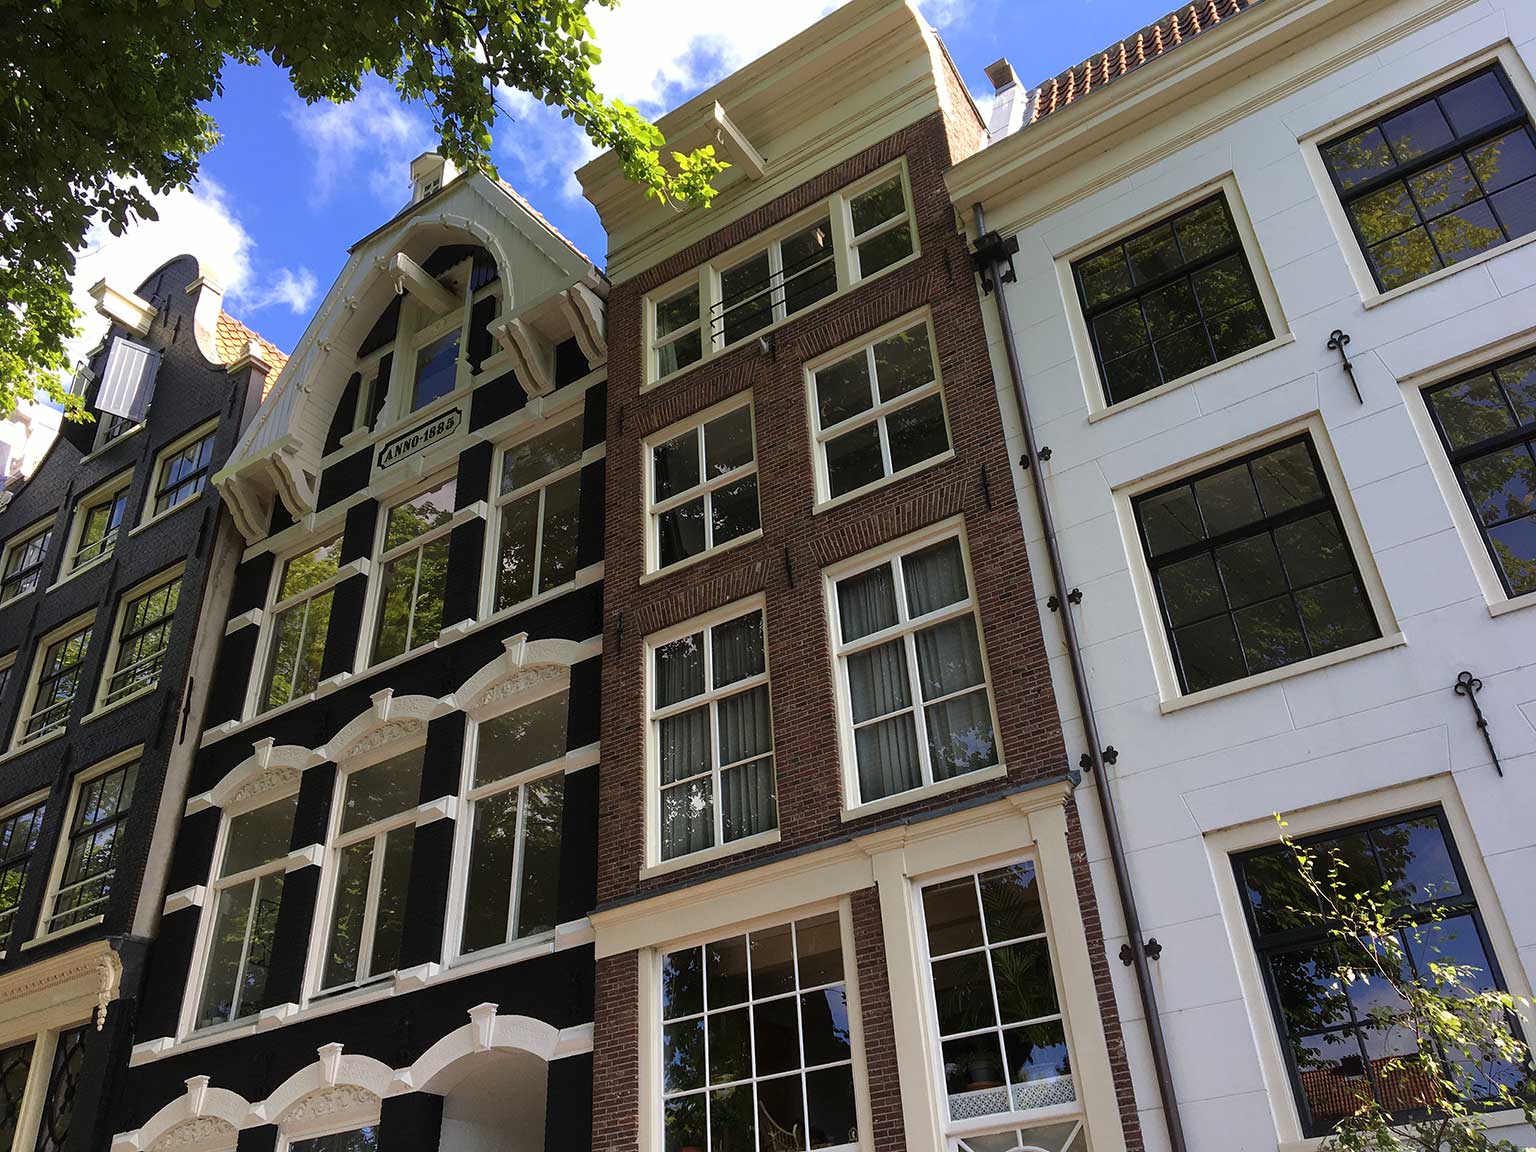 Gables of Binnenkant 48 to 51, Amsterdam